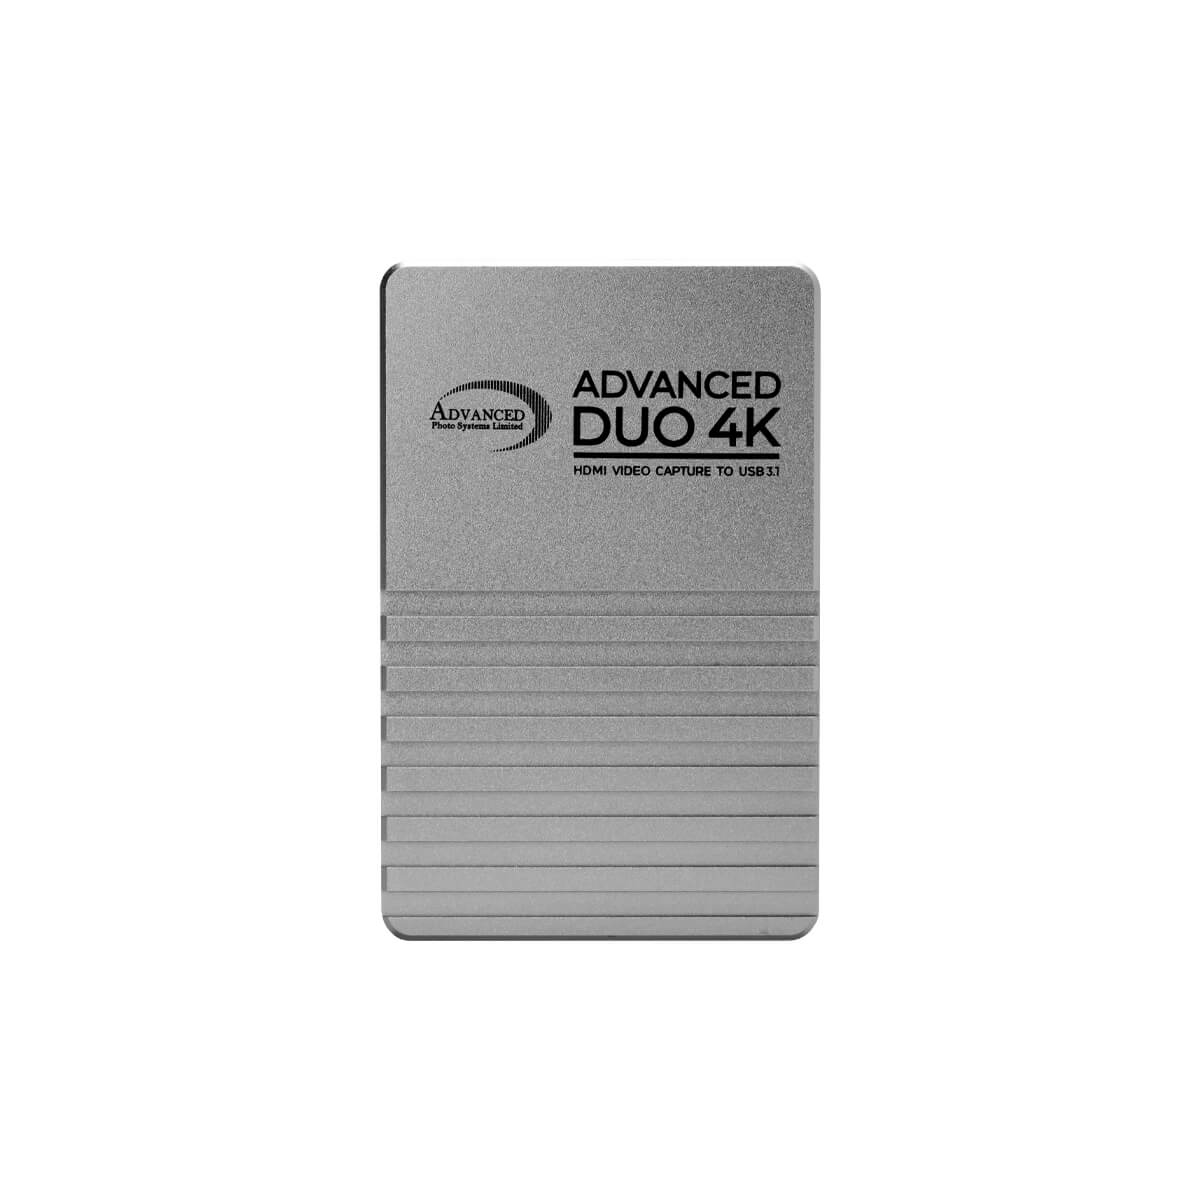 Advanced Duo 4K USB3.1 Gen2 Card Capture